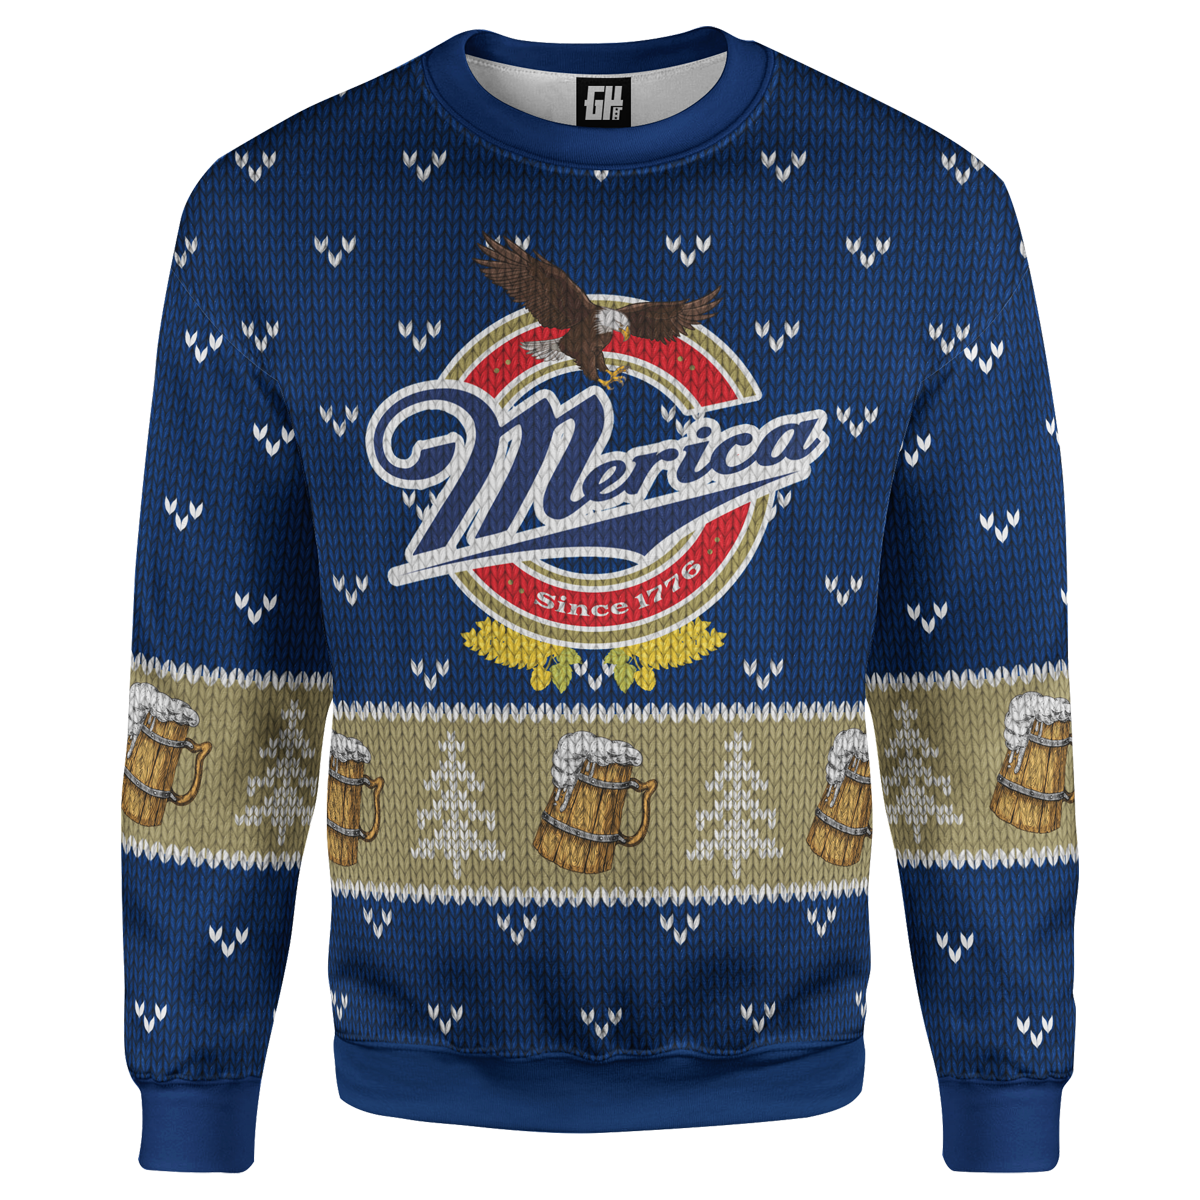 Merica Lite Christmas Sweater